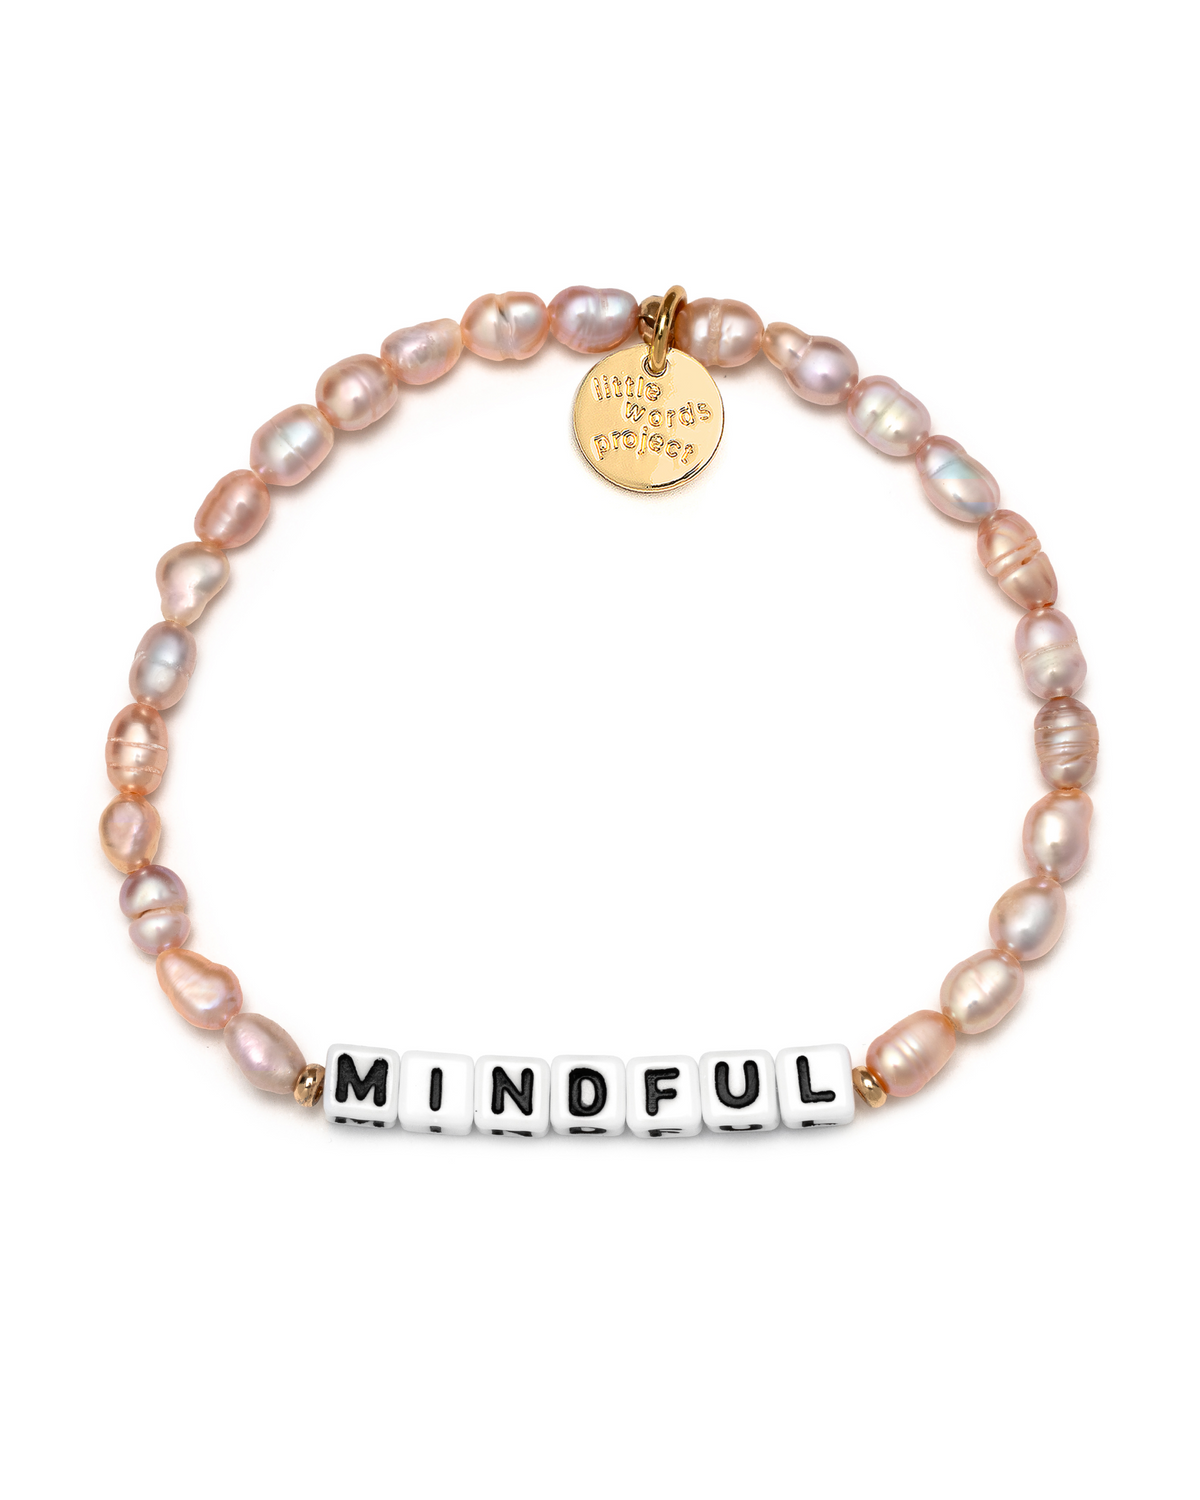 Little Words Project Mindful Bracelet